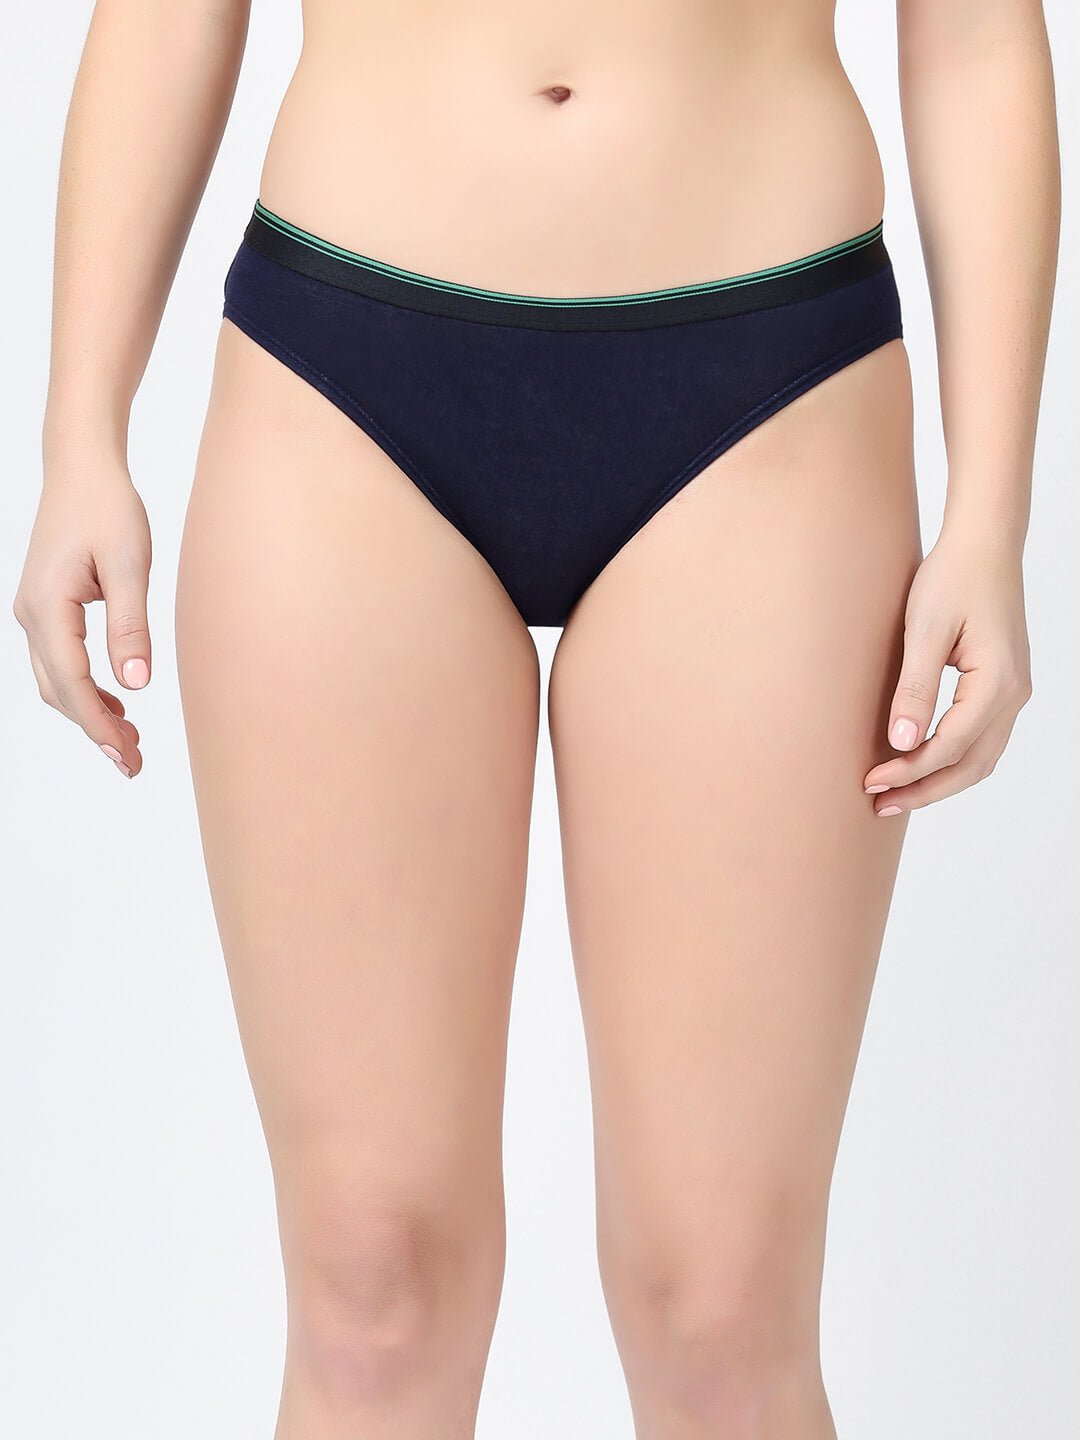 ANTAR Women's Hemp Bikini Panty Naturally Antibacterial Low Waist - S /  Navy Blue / Pack of 1